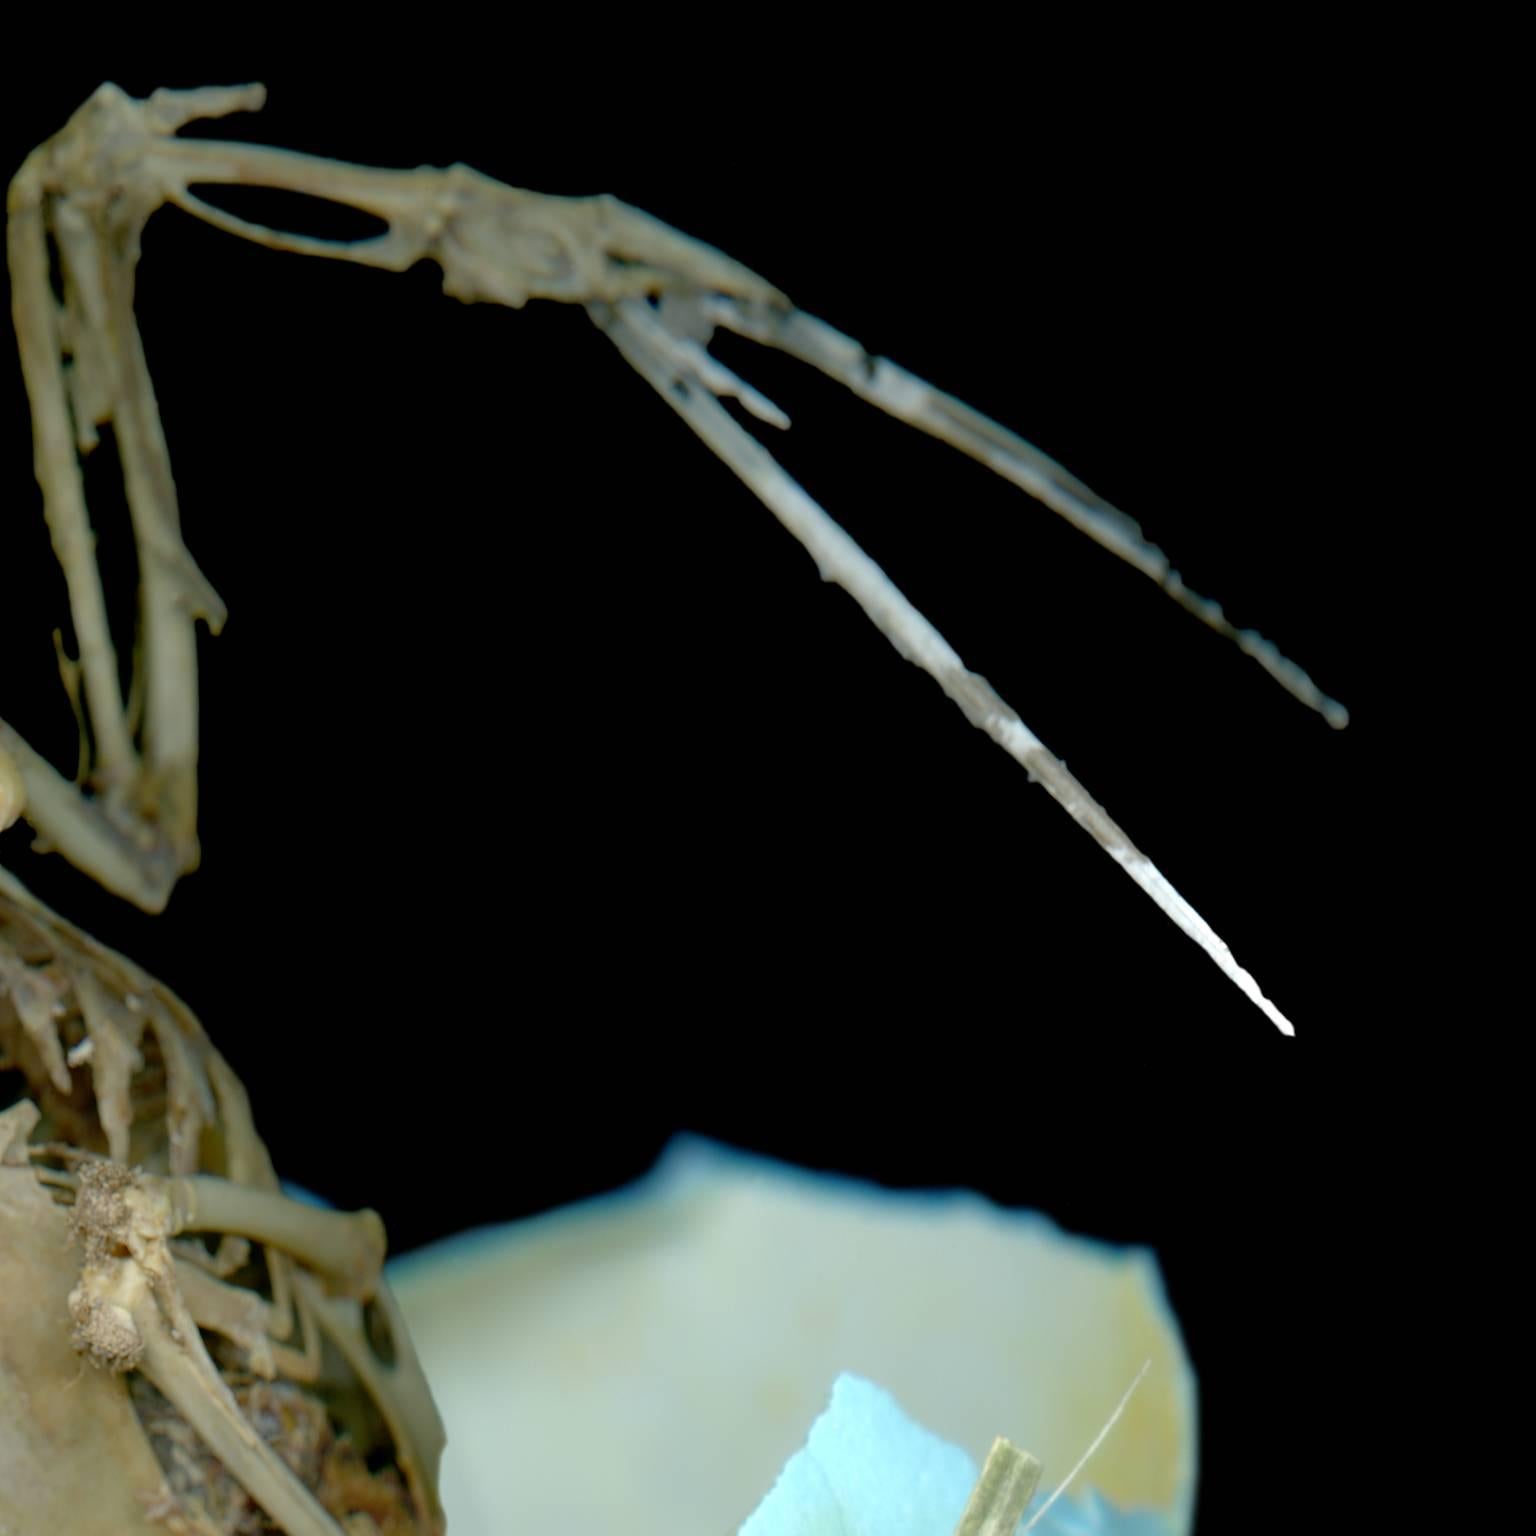 'Alpha & Omega' by Debb VanDelinder depicts a bird skeleton in a blue eggshell. The bones and egg speak to the cycle of life, science, and wonder. The black background adds to a sense of drama. VanDelinder uses a digital scanner as an image capture